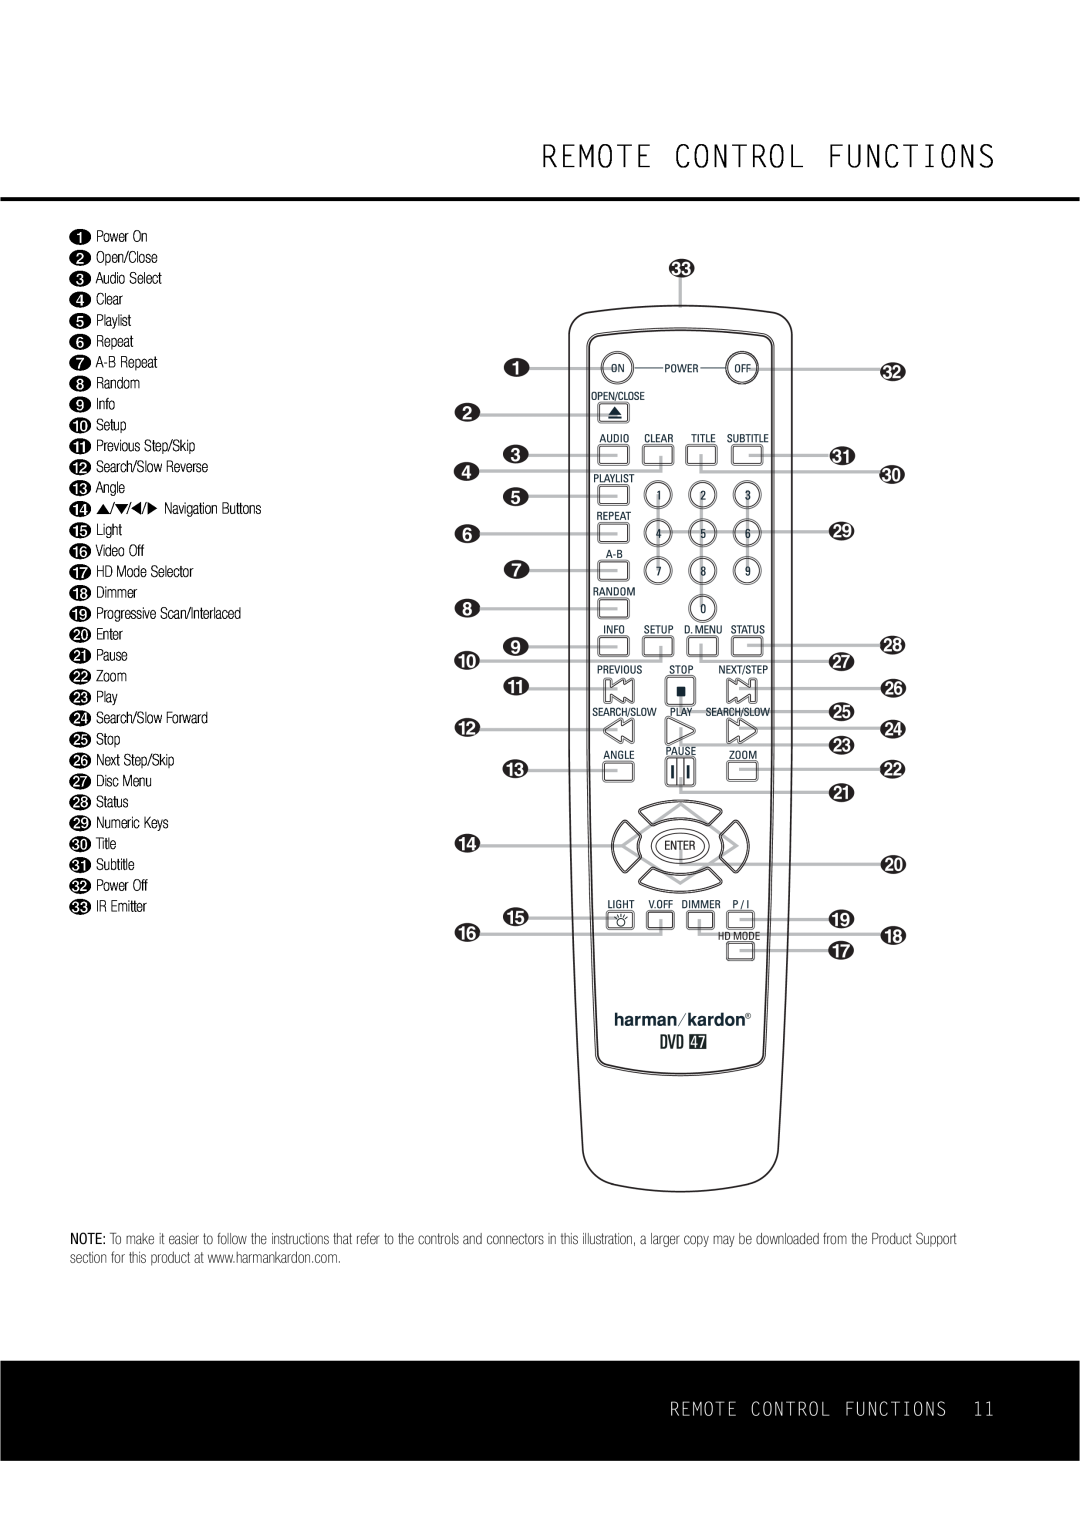 Harman-Kardon DVD47 owner manual Remote Control Functions, 0 1 2 